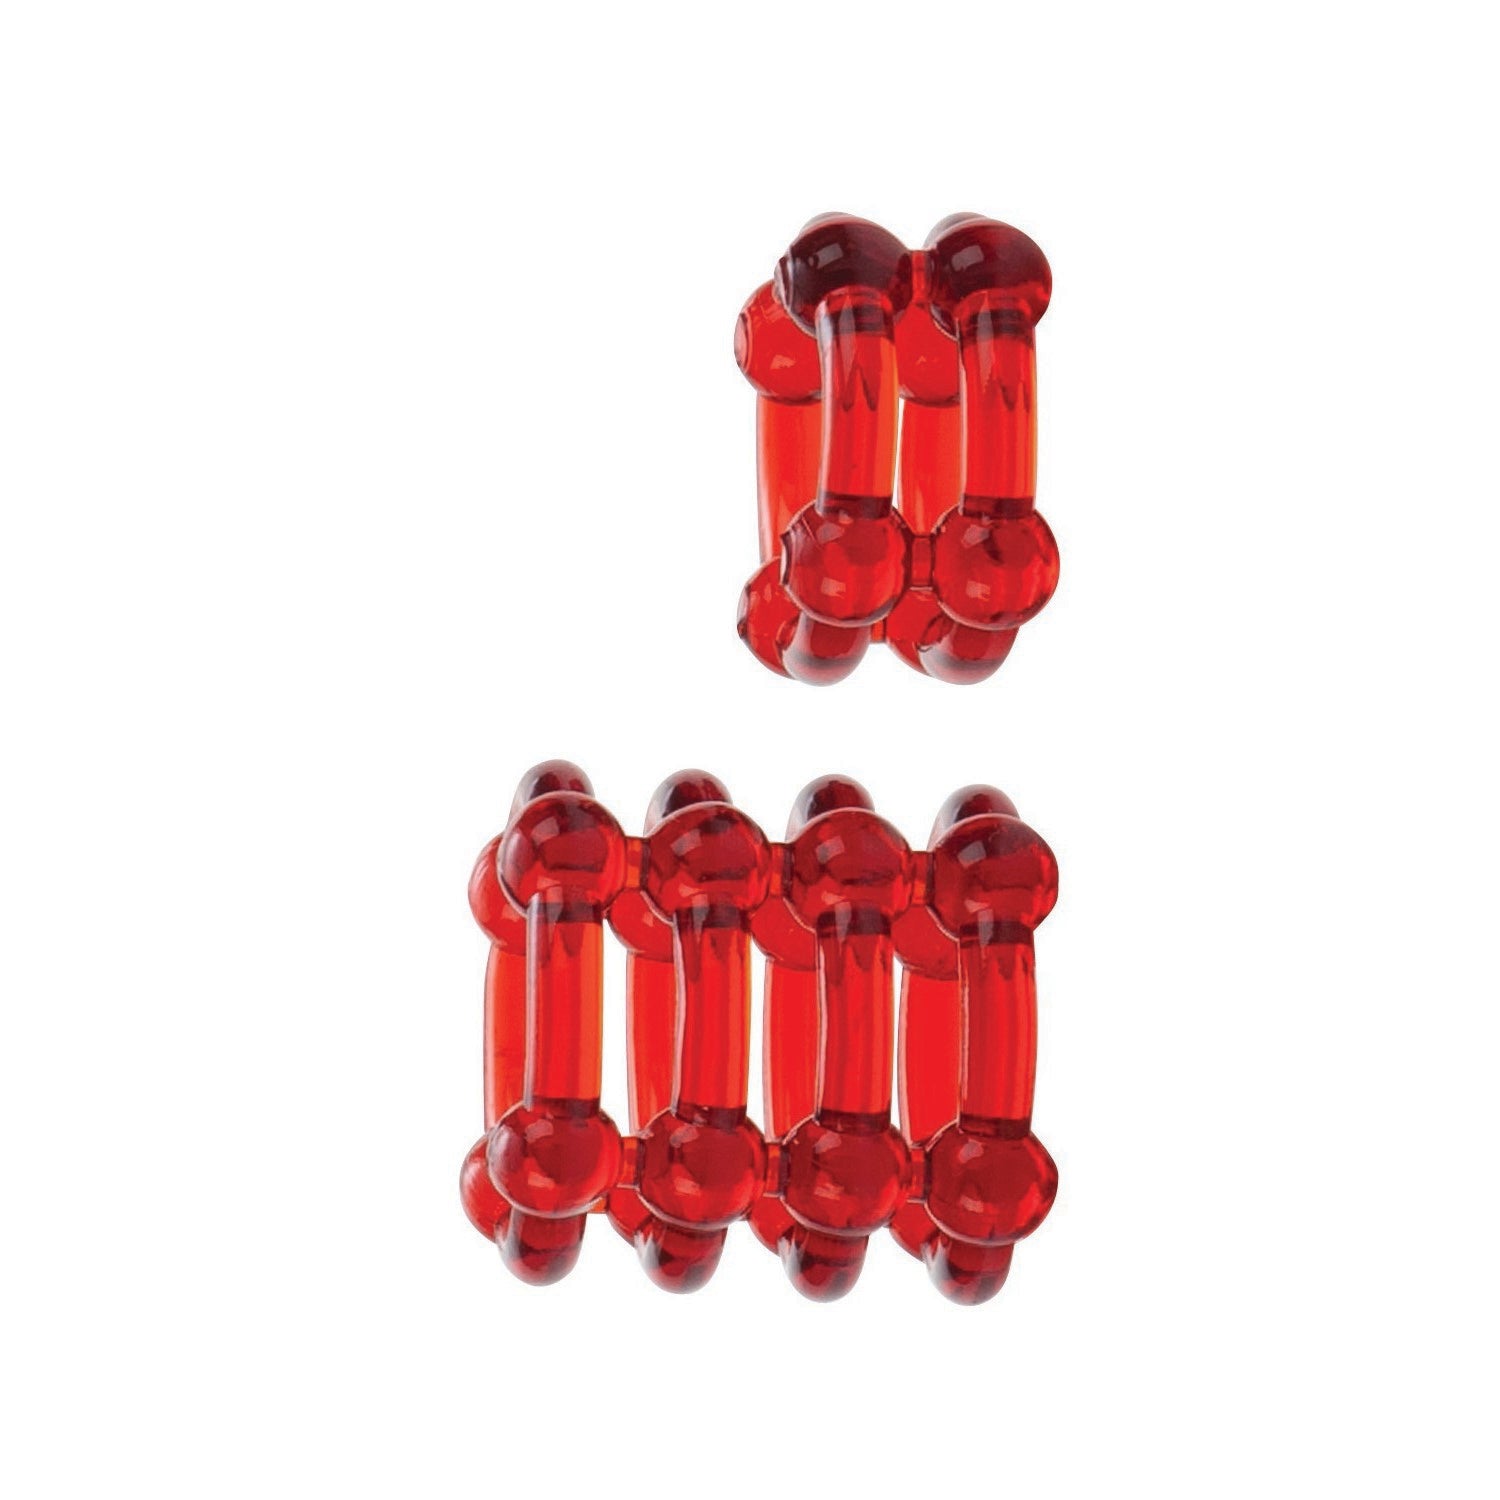 Colt Enhancer Rings - Red SE6775112